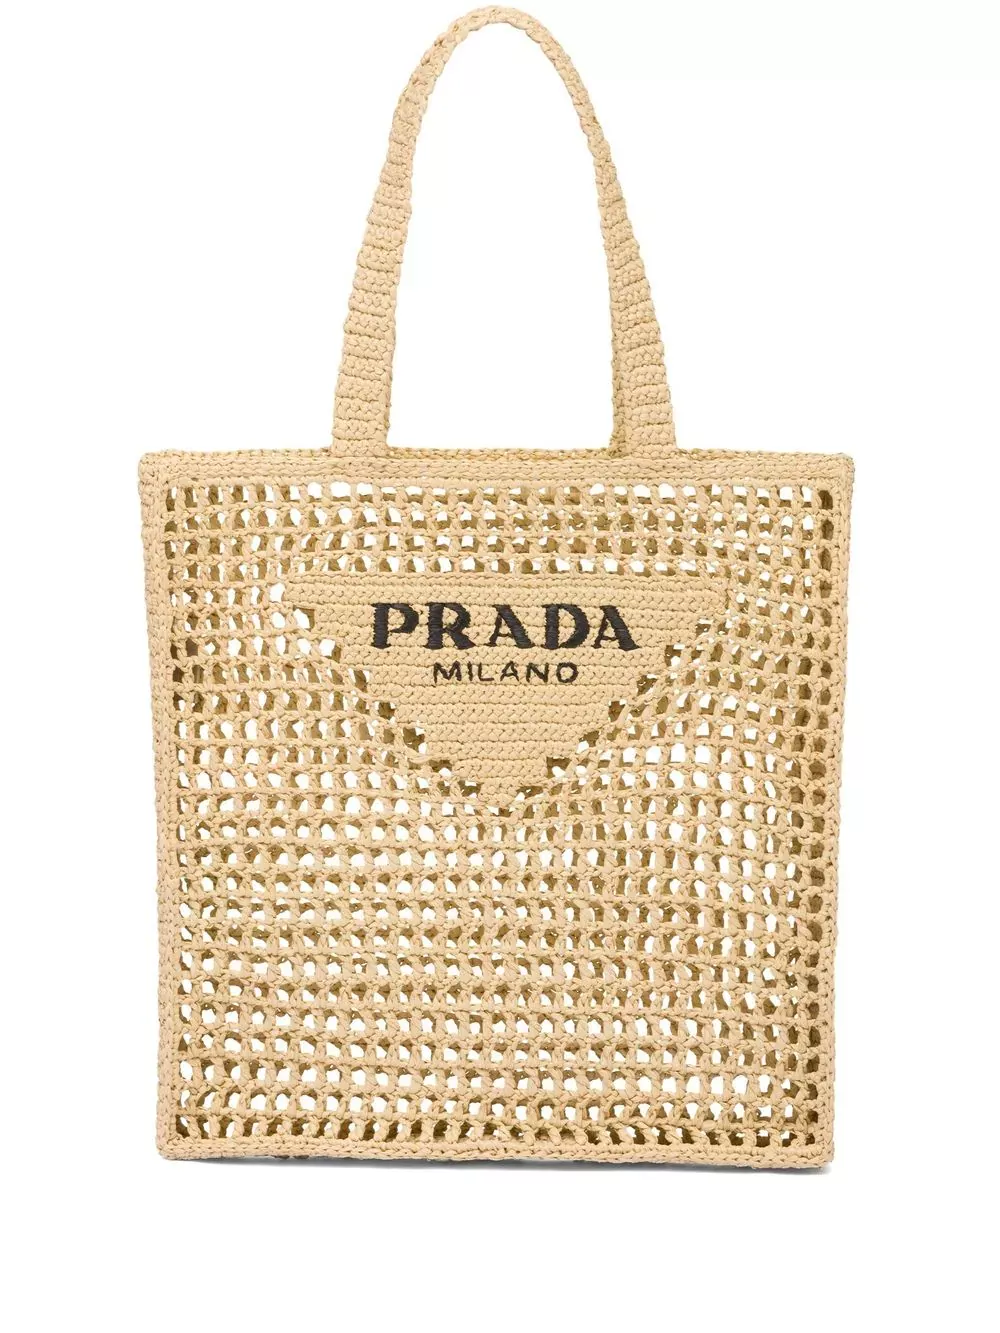 The Prada Raffia Tote Bag Remains THE Bag For Summer 2023